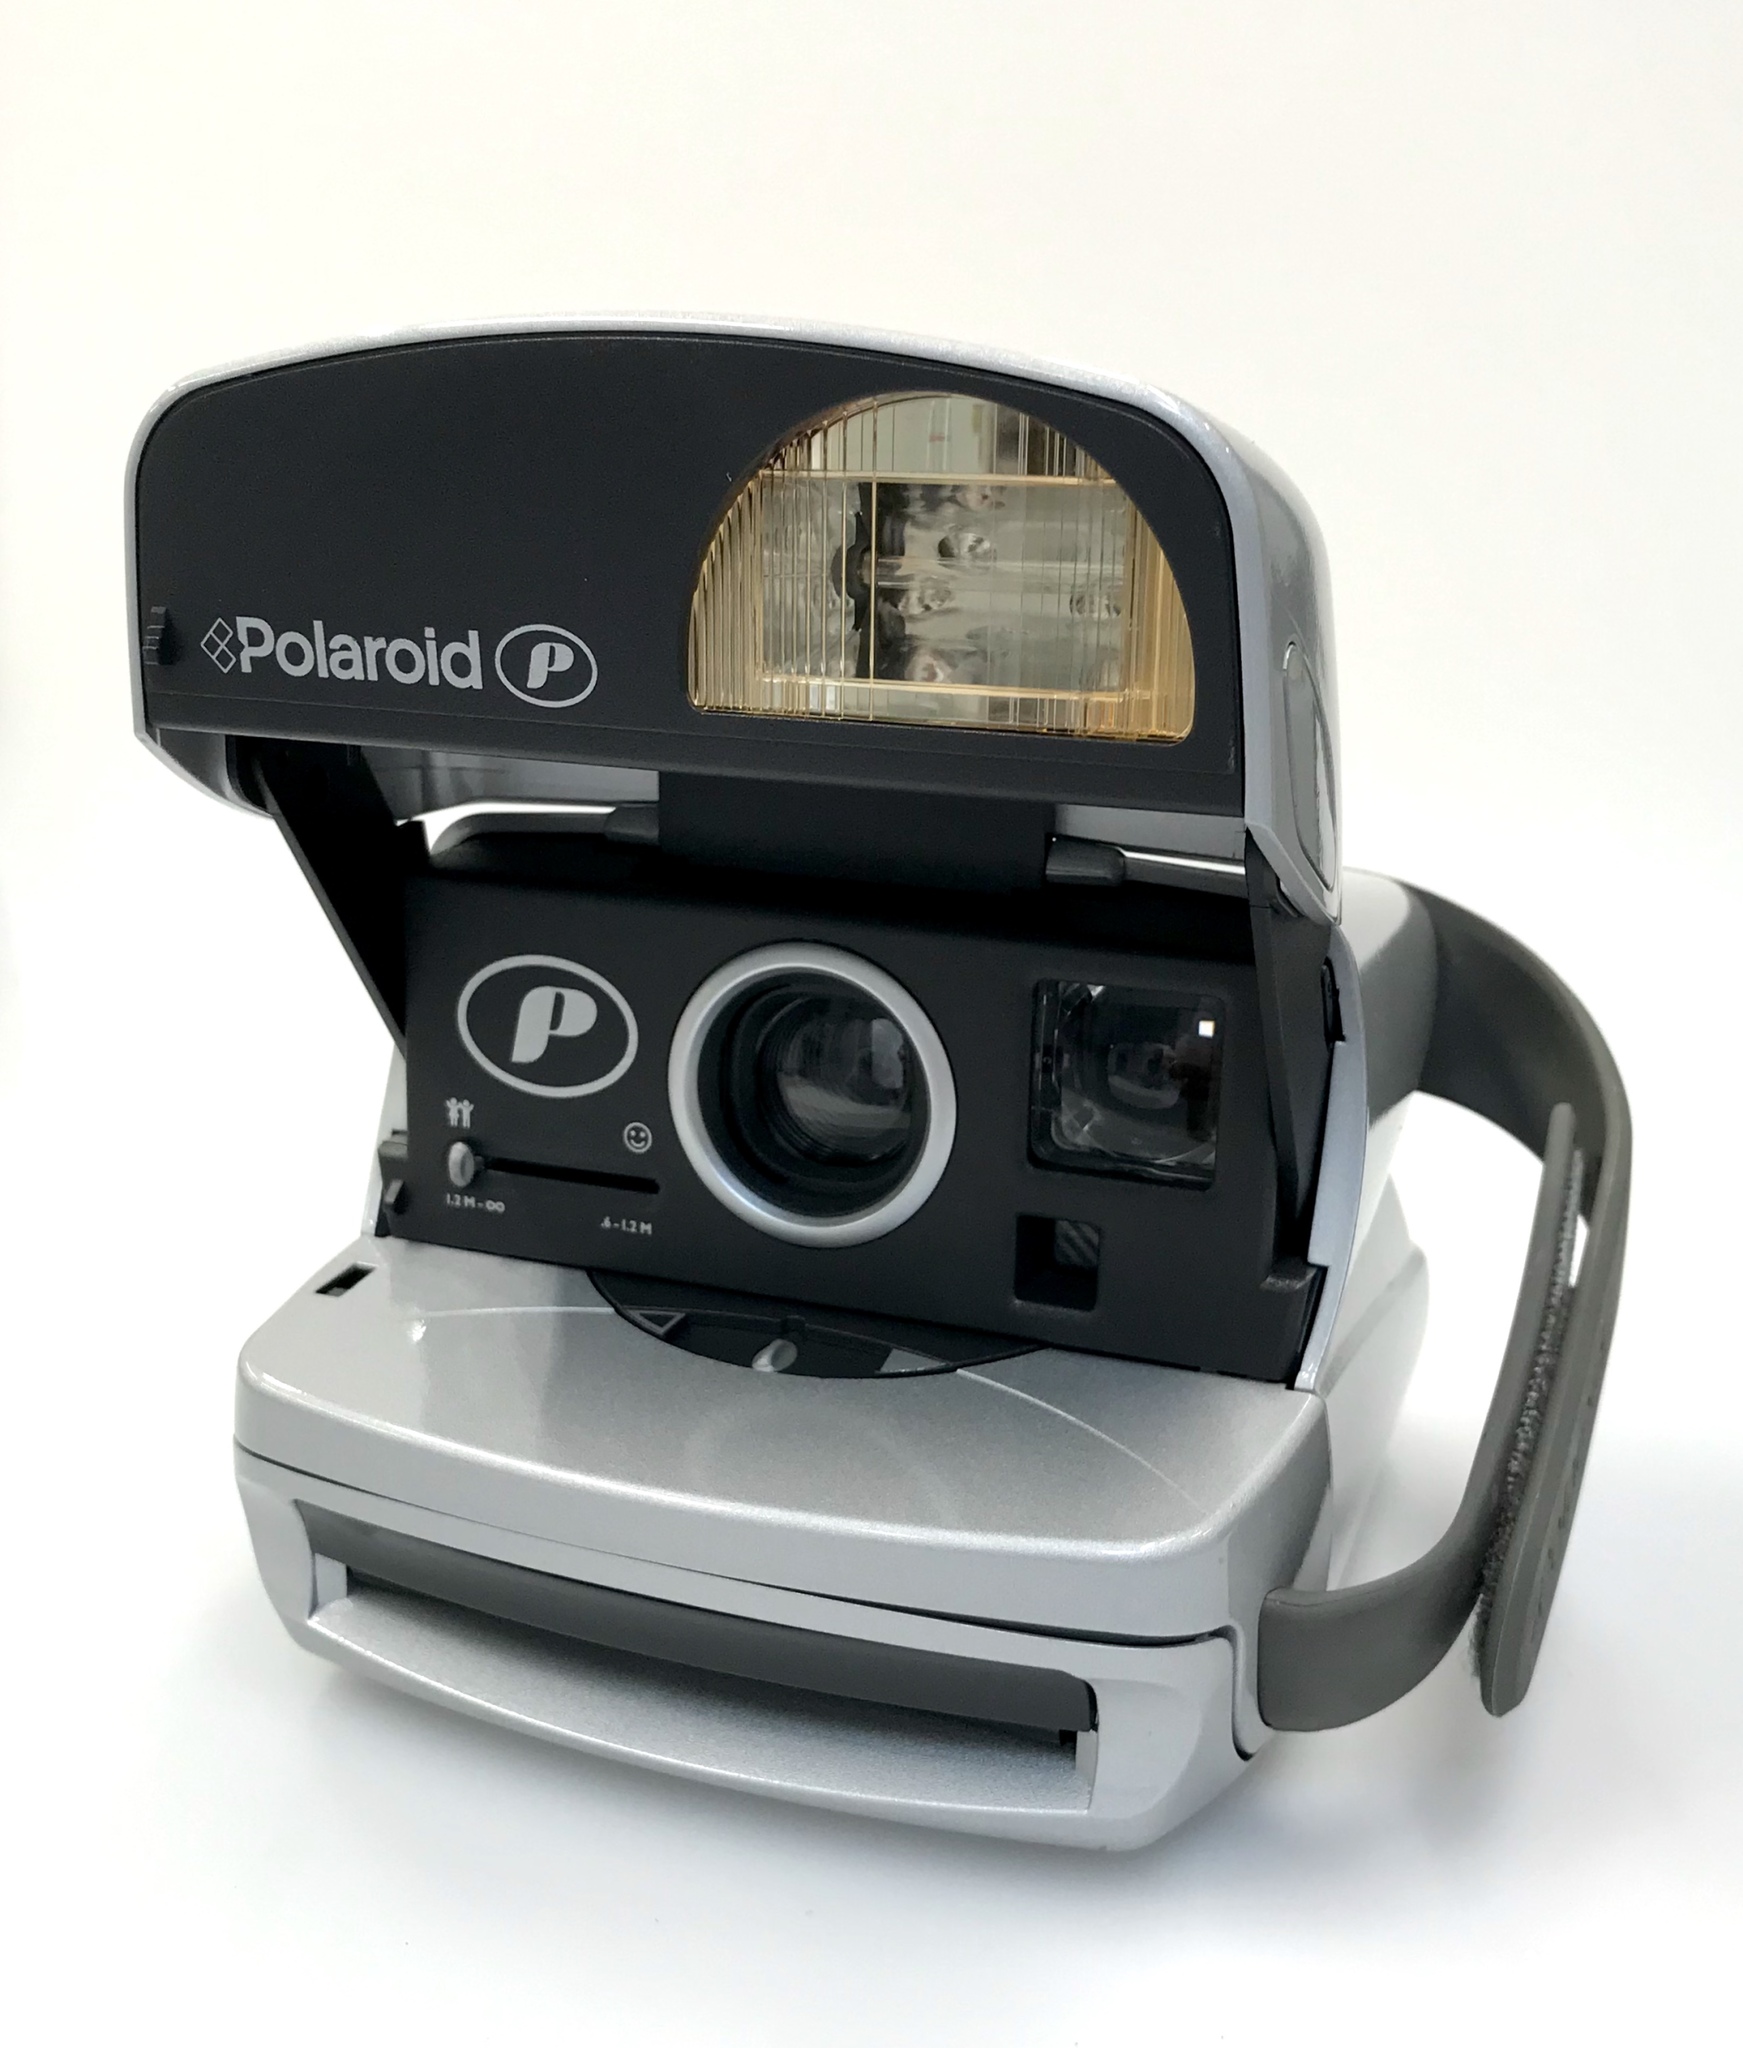 Polaroid 600 Round Instant Camera (Silver, Refurbished) 4710 B&H